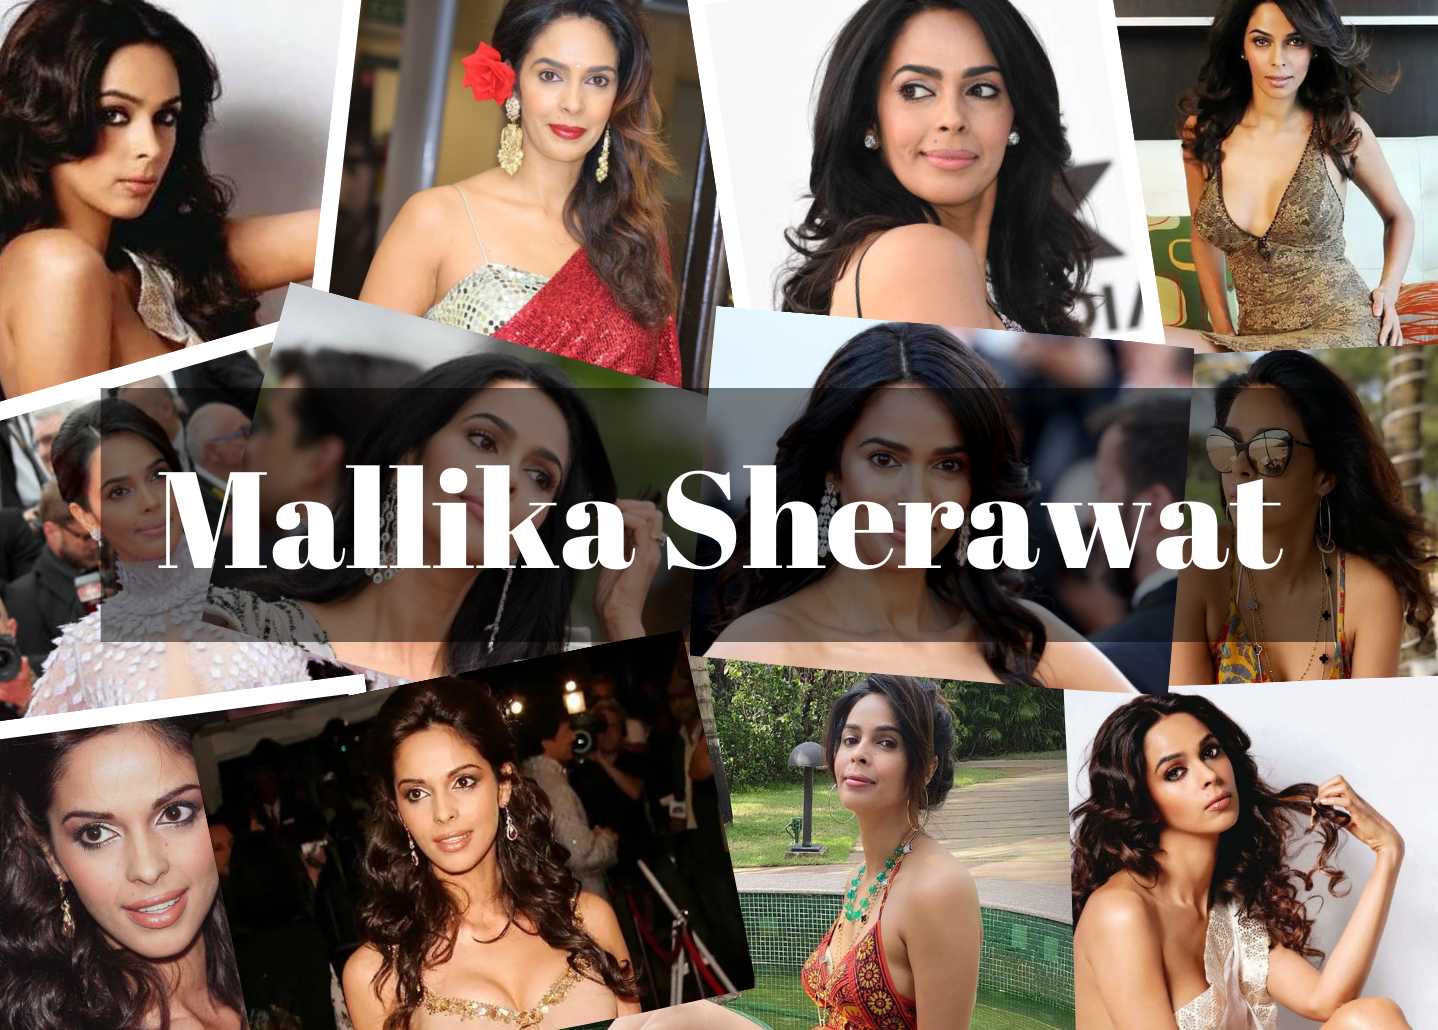 Mallika Sherawat | Biography, Affairs, Struggles, Movies